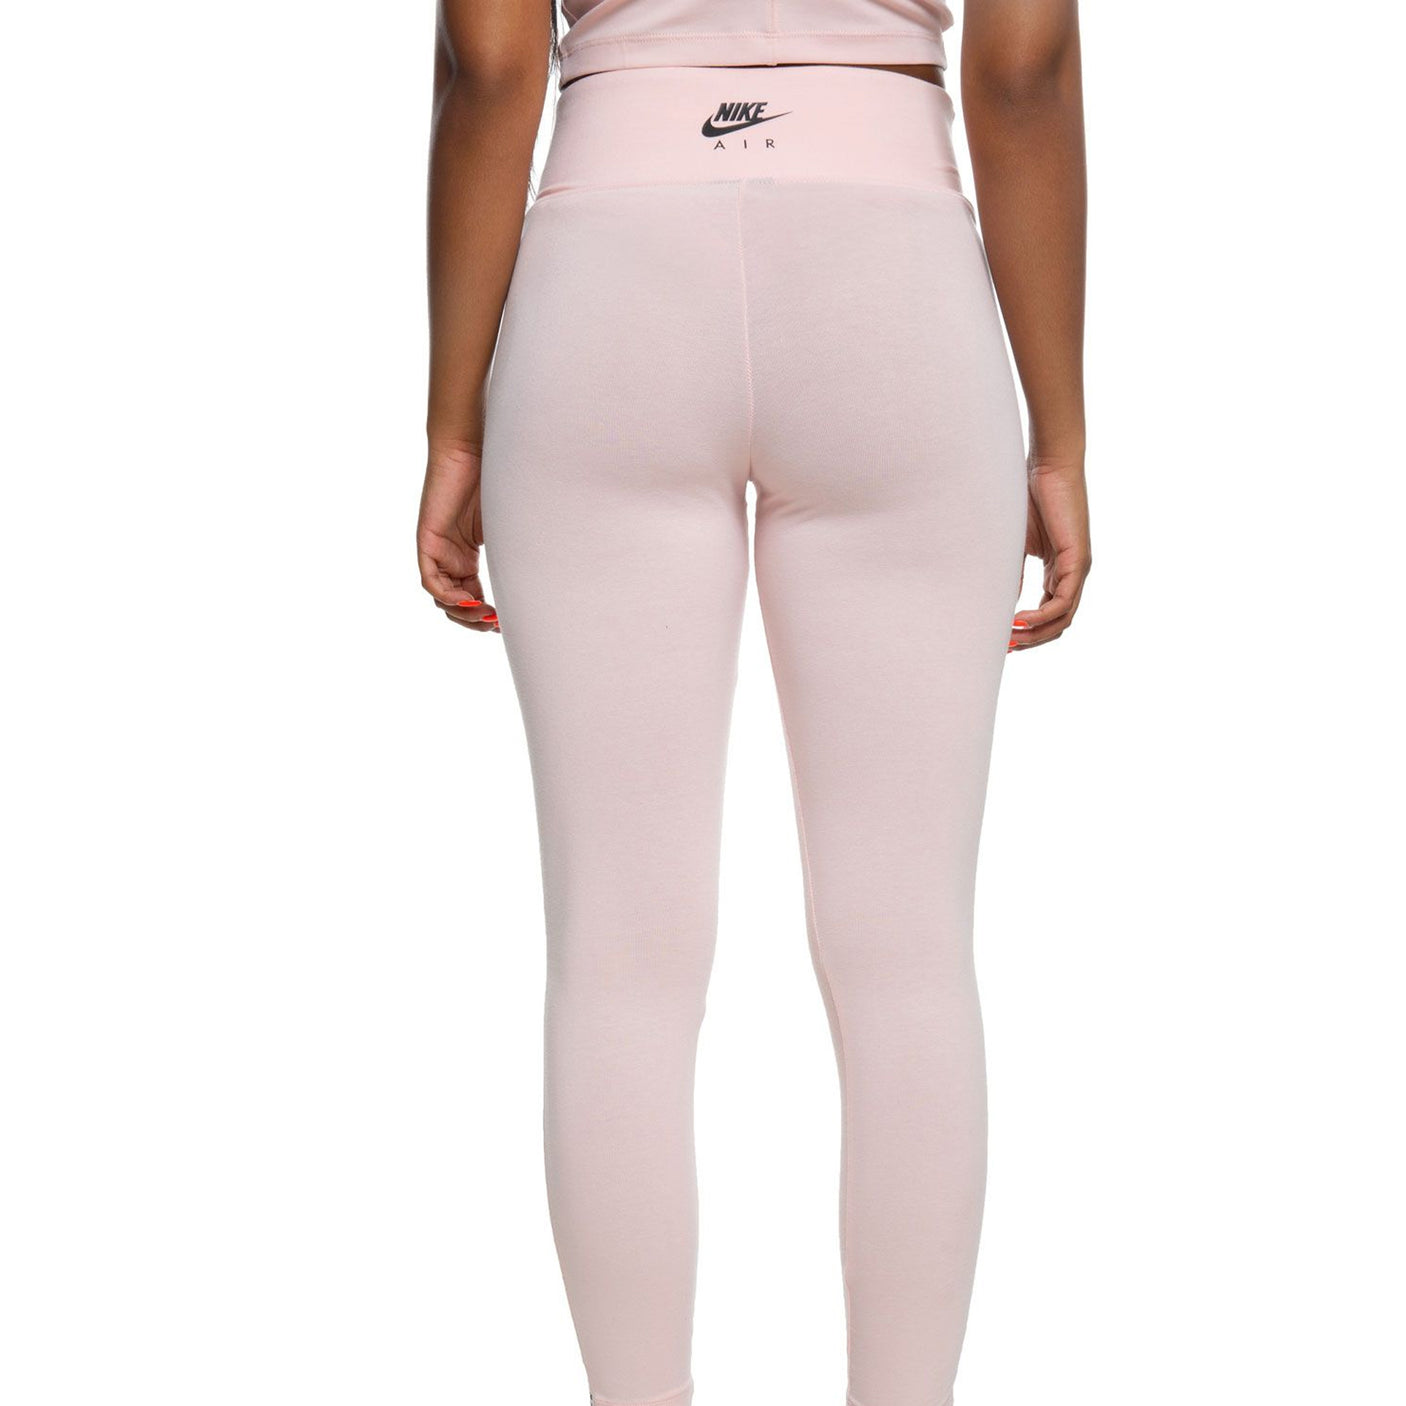 Nike Womens Air Tights Echo Pink/Black Back